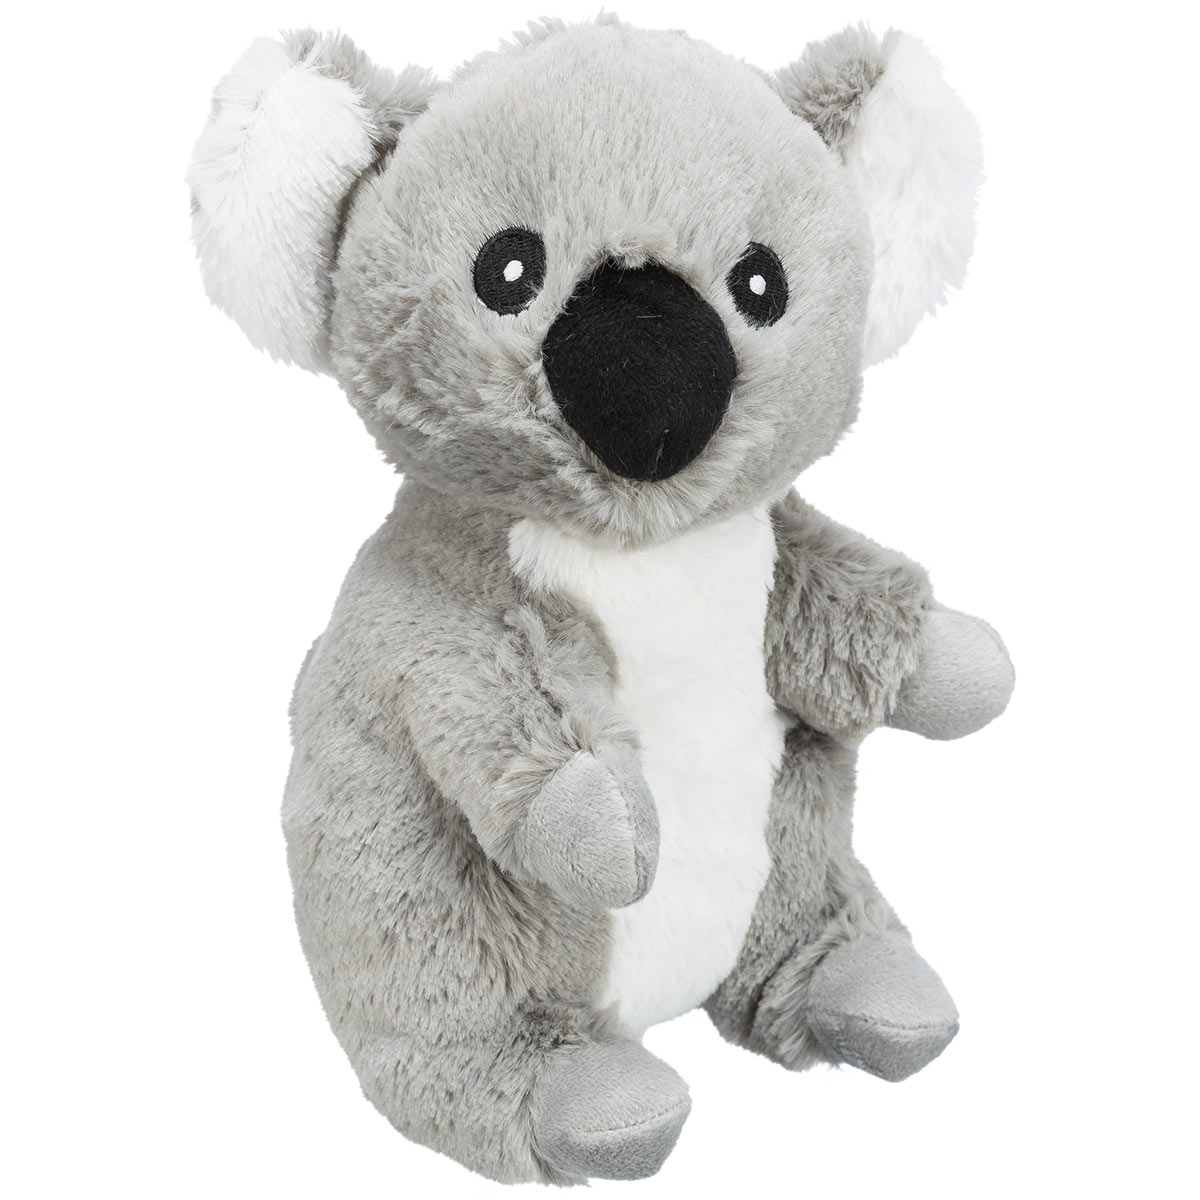 Trixie Be Eco koala Elly, plyšová, recyklovaná, 21 cm